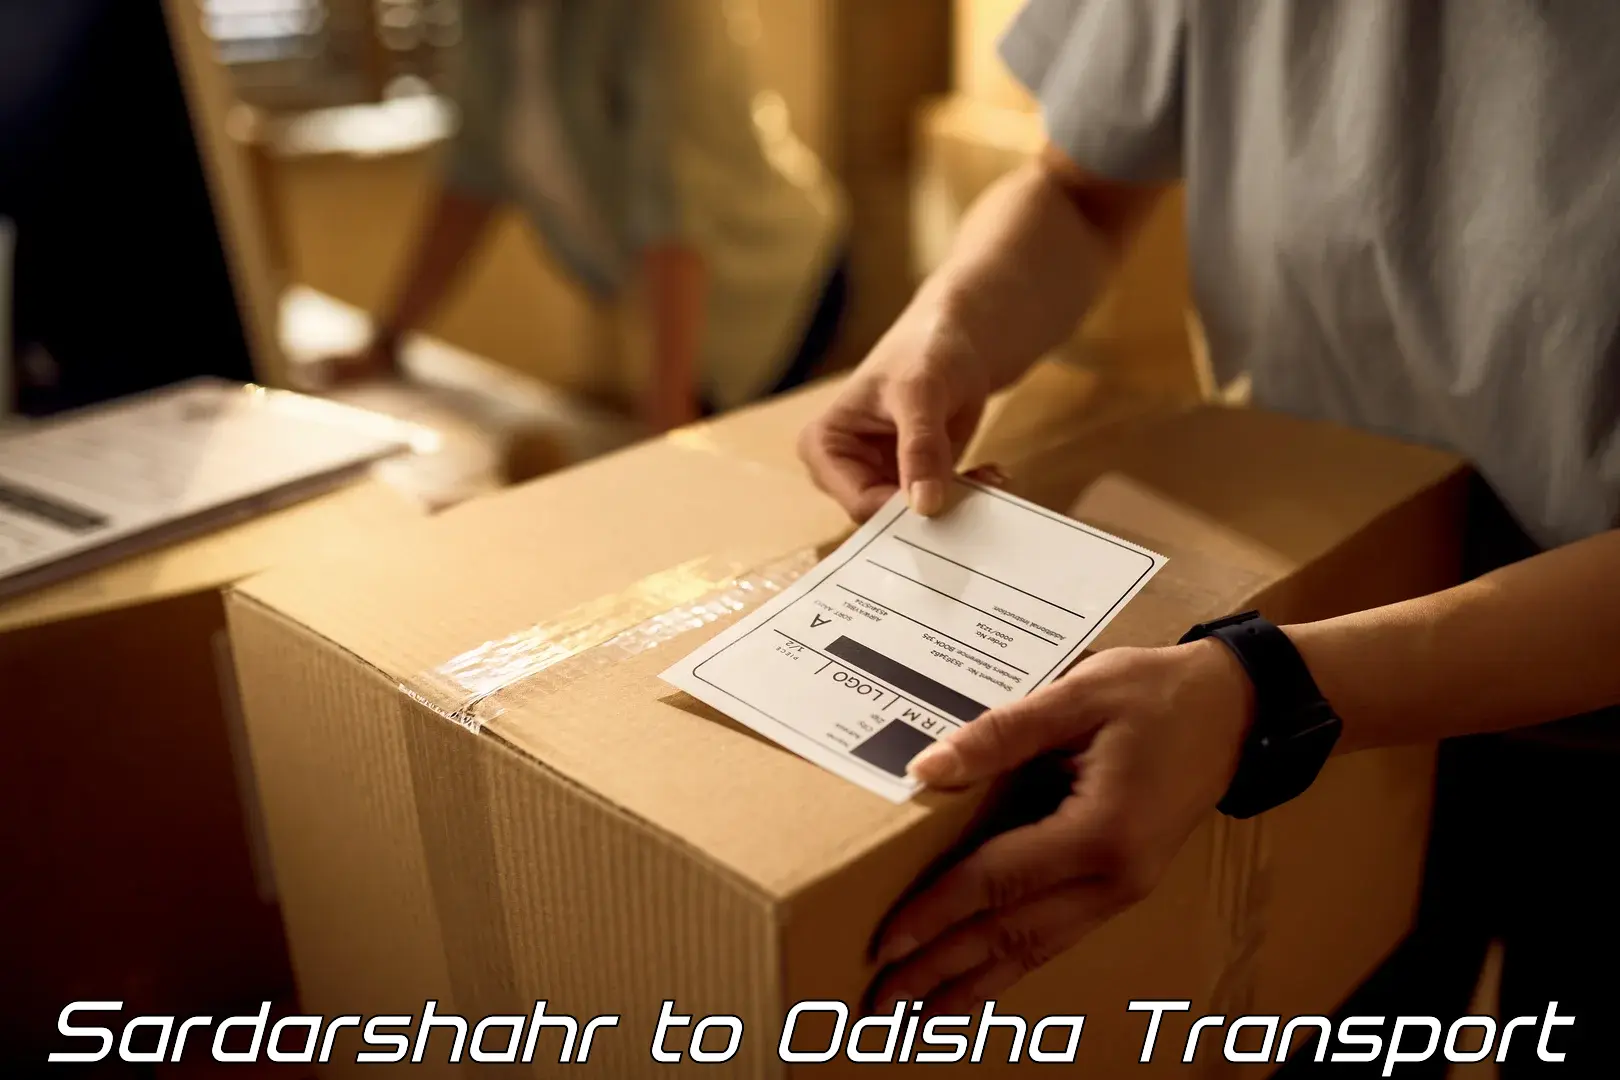 Daily transport service Sardarshahr to Odisha